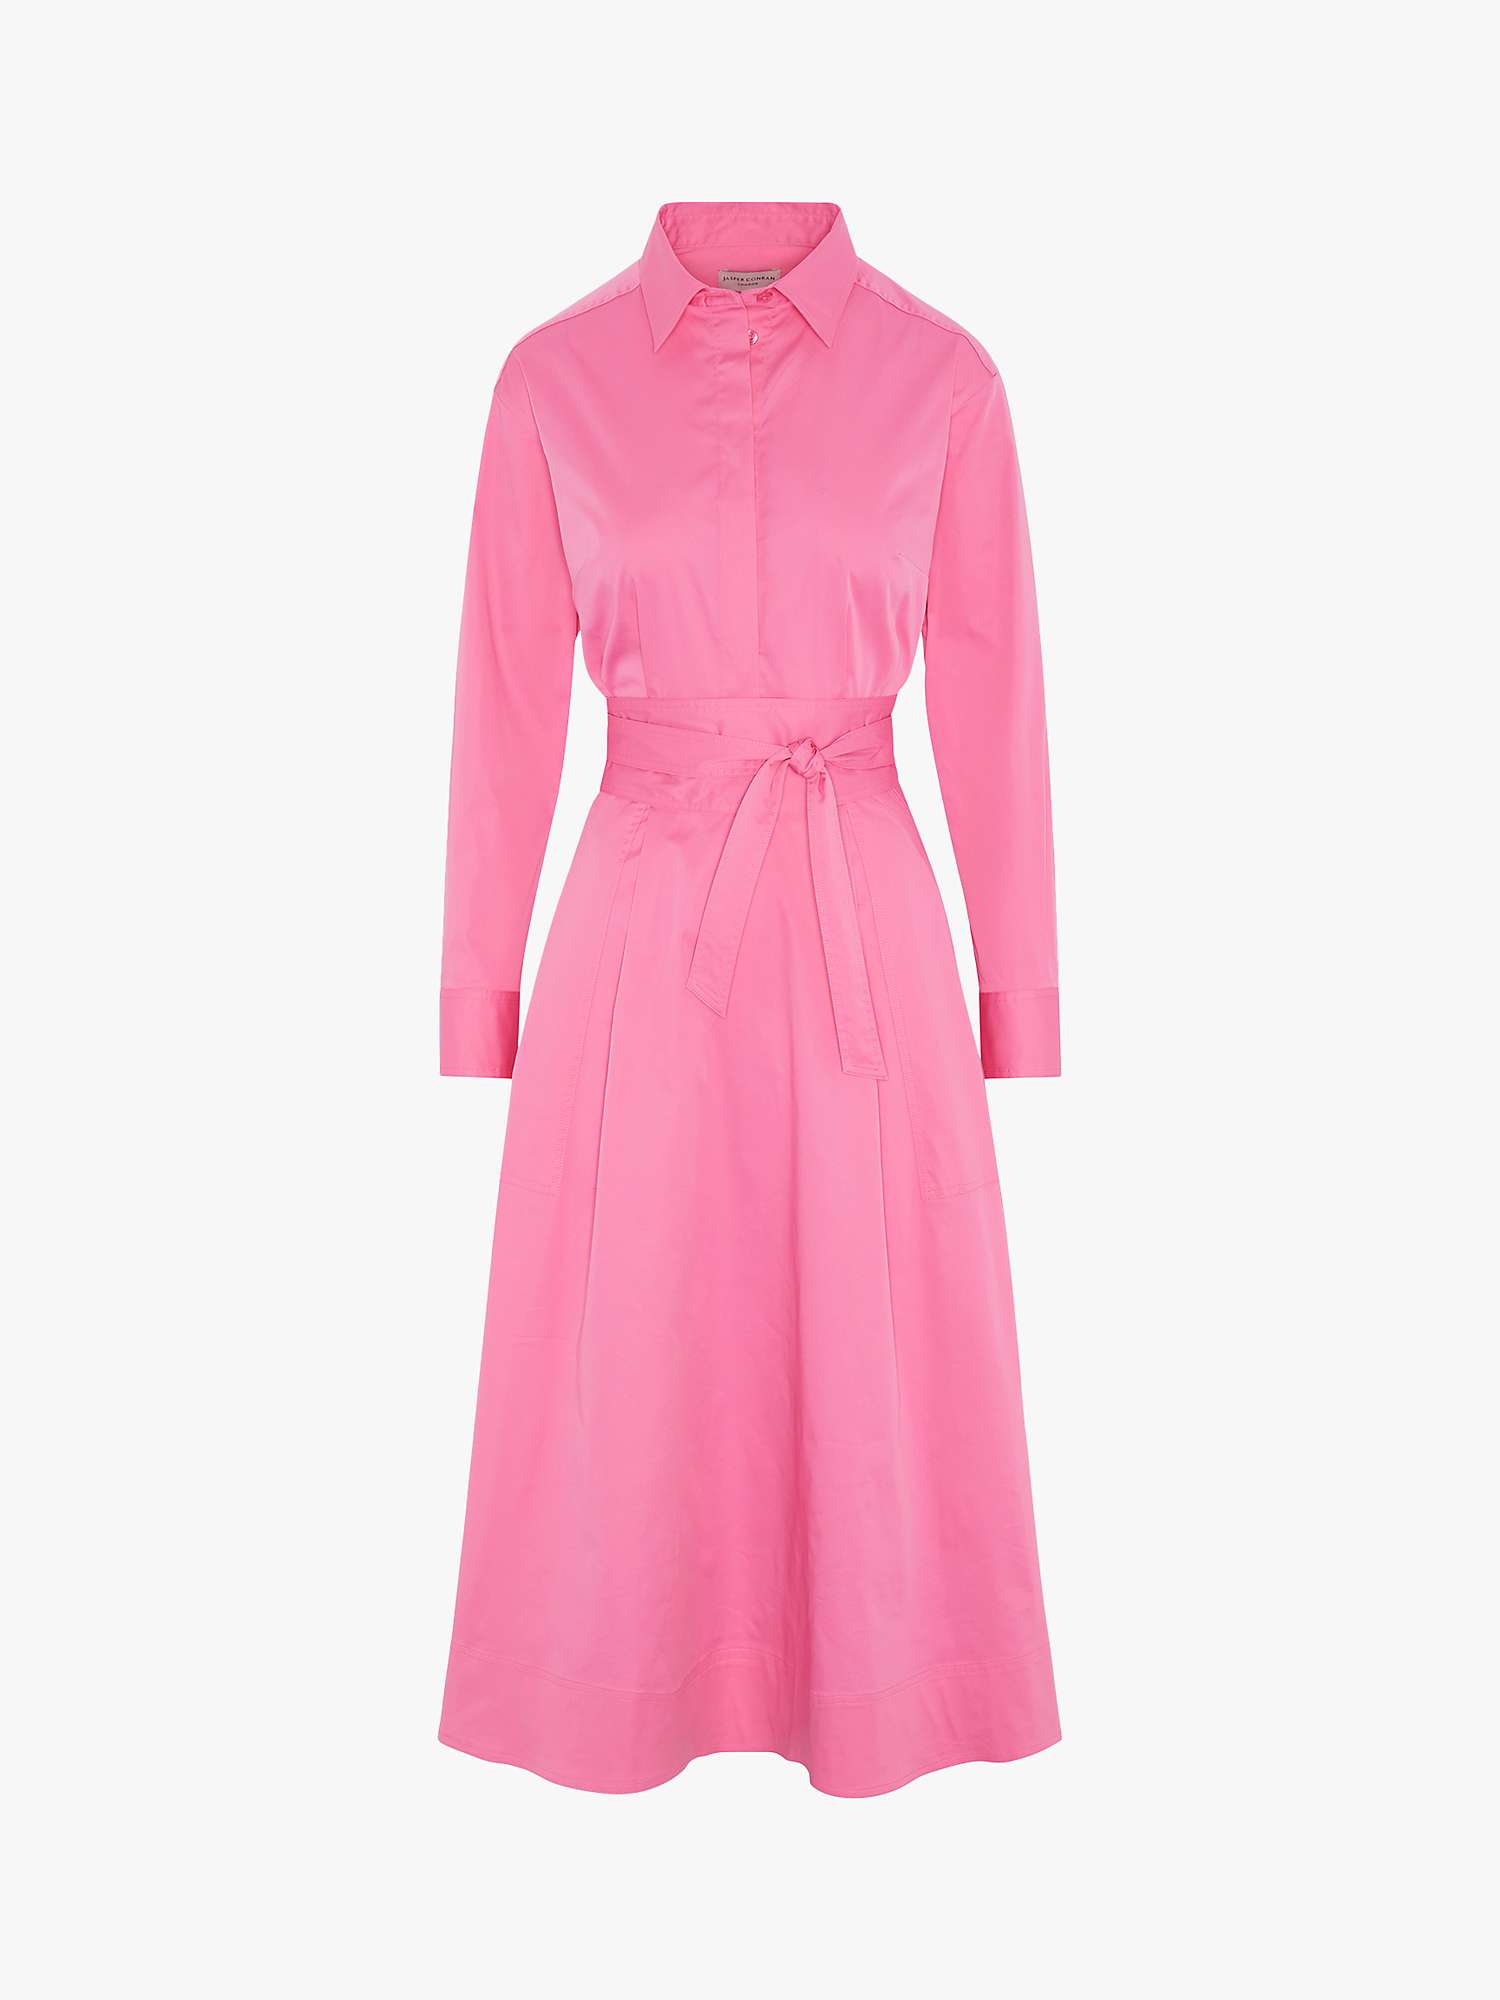 Jasper Conran Blythe Shirt Midi Dress, Hot Pink at John Lewis & Partners